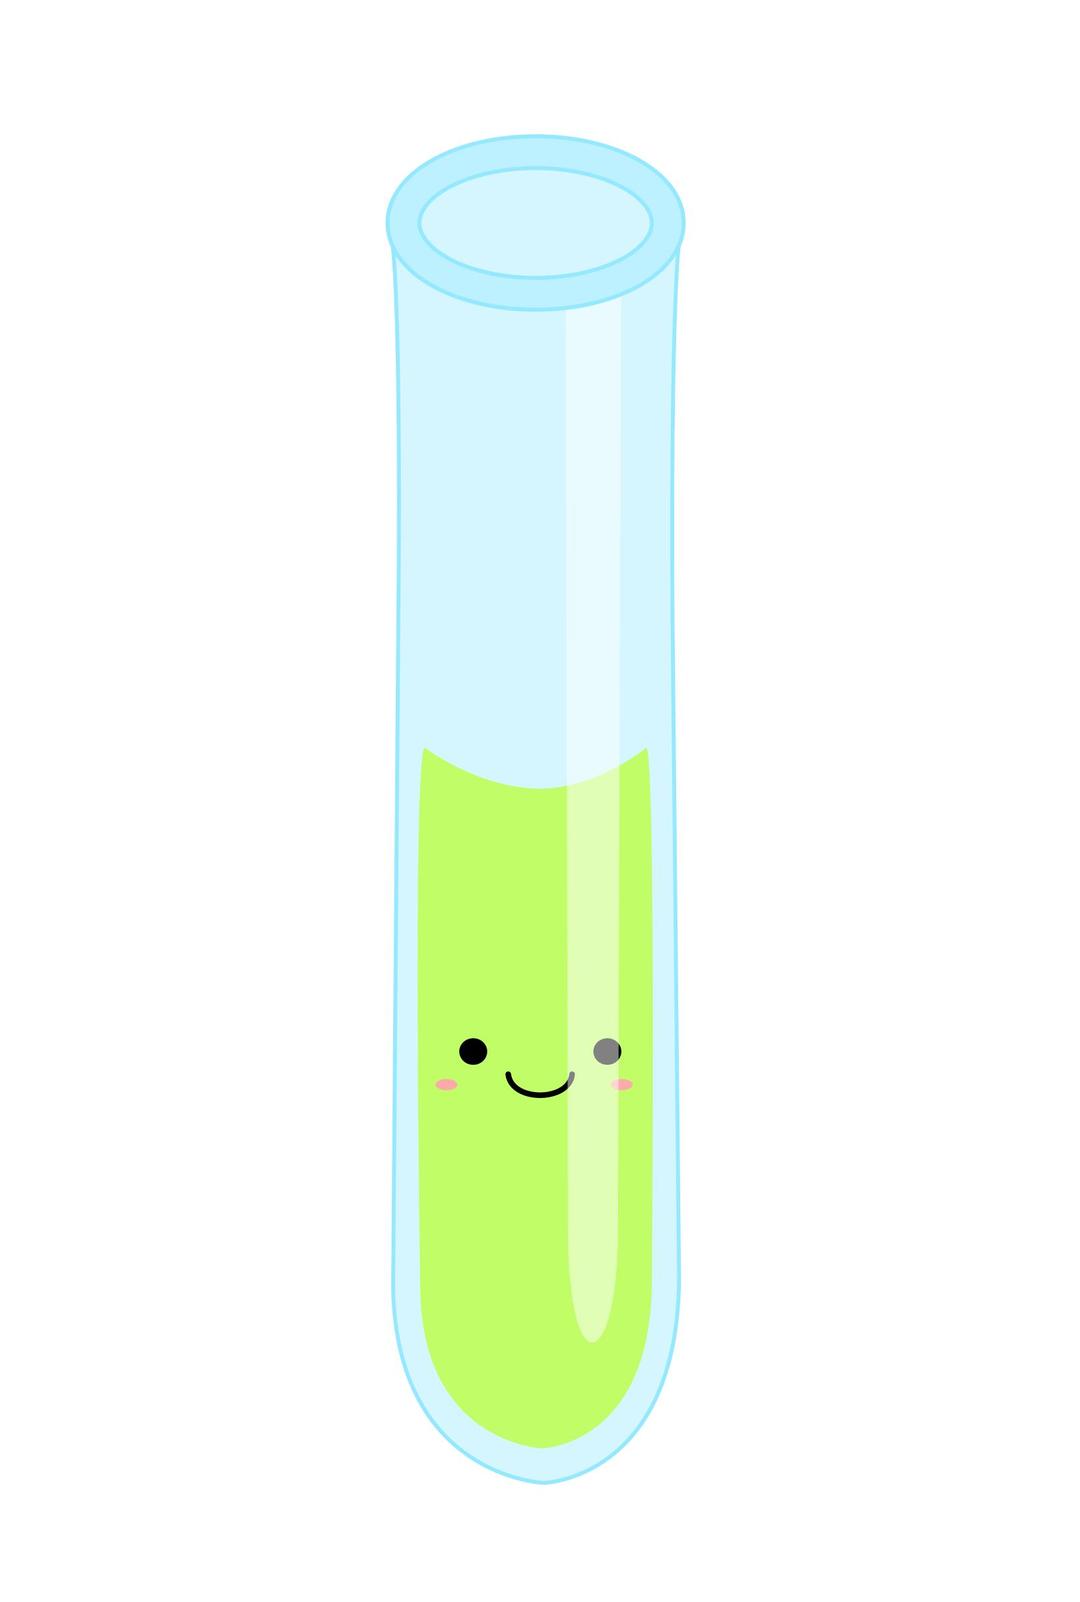 Kawaii test tube with liquid png transparent